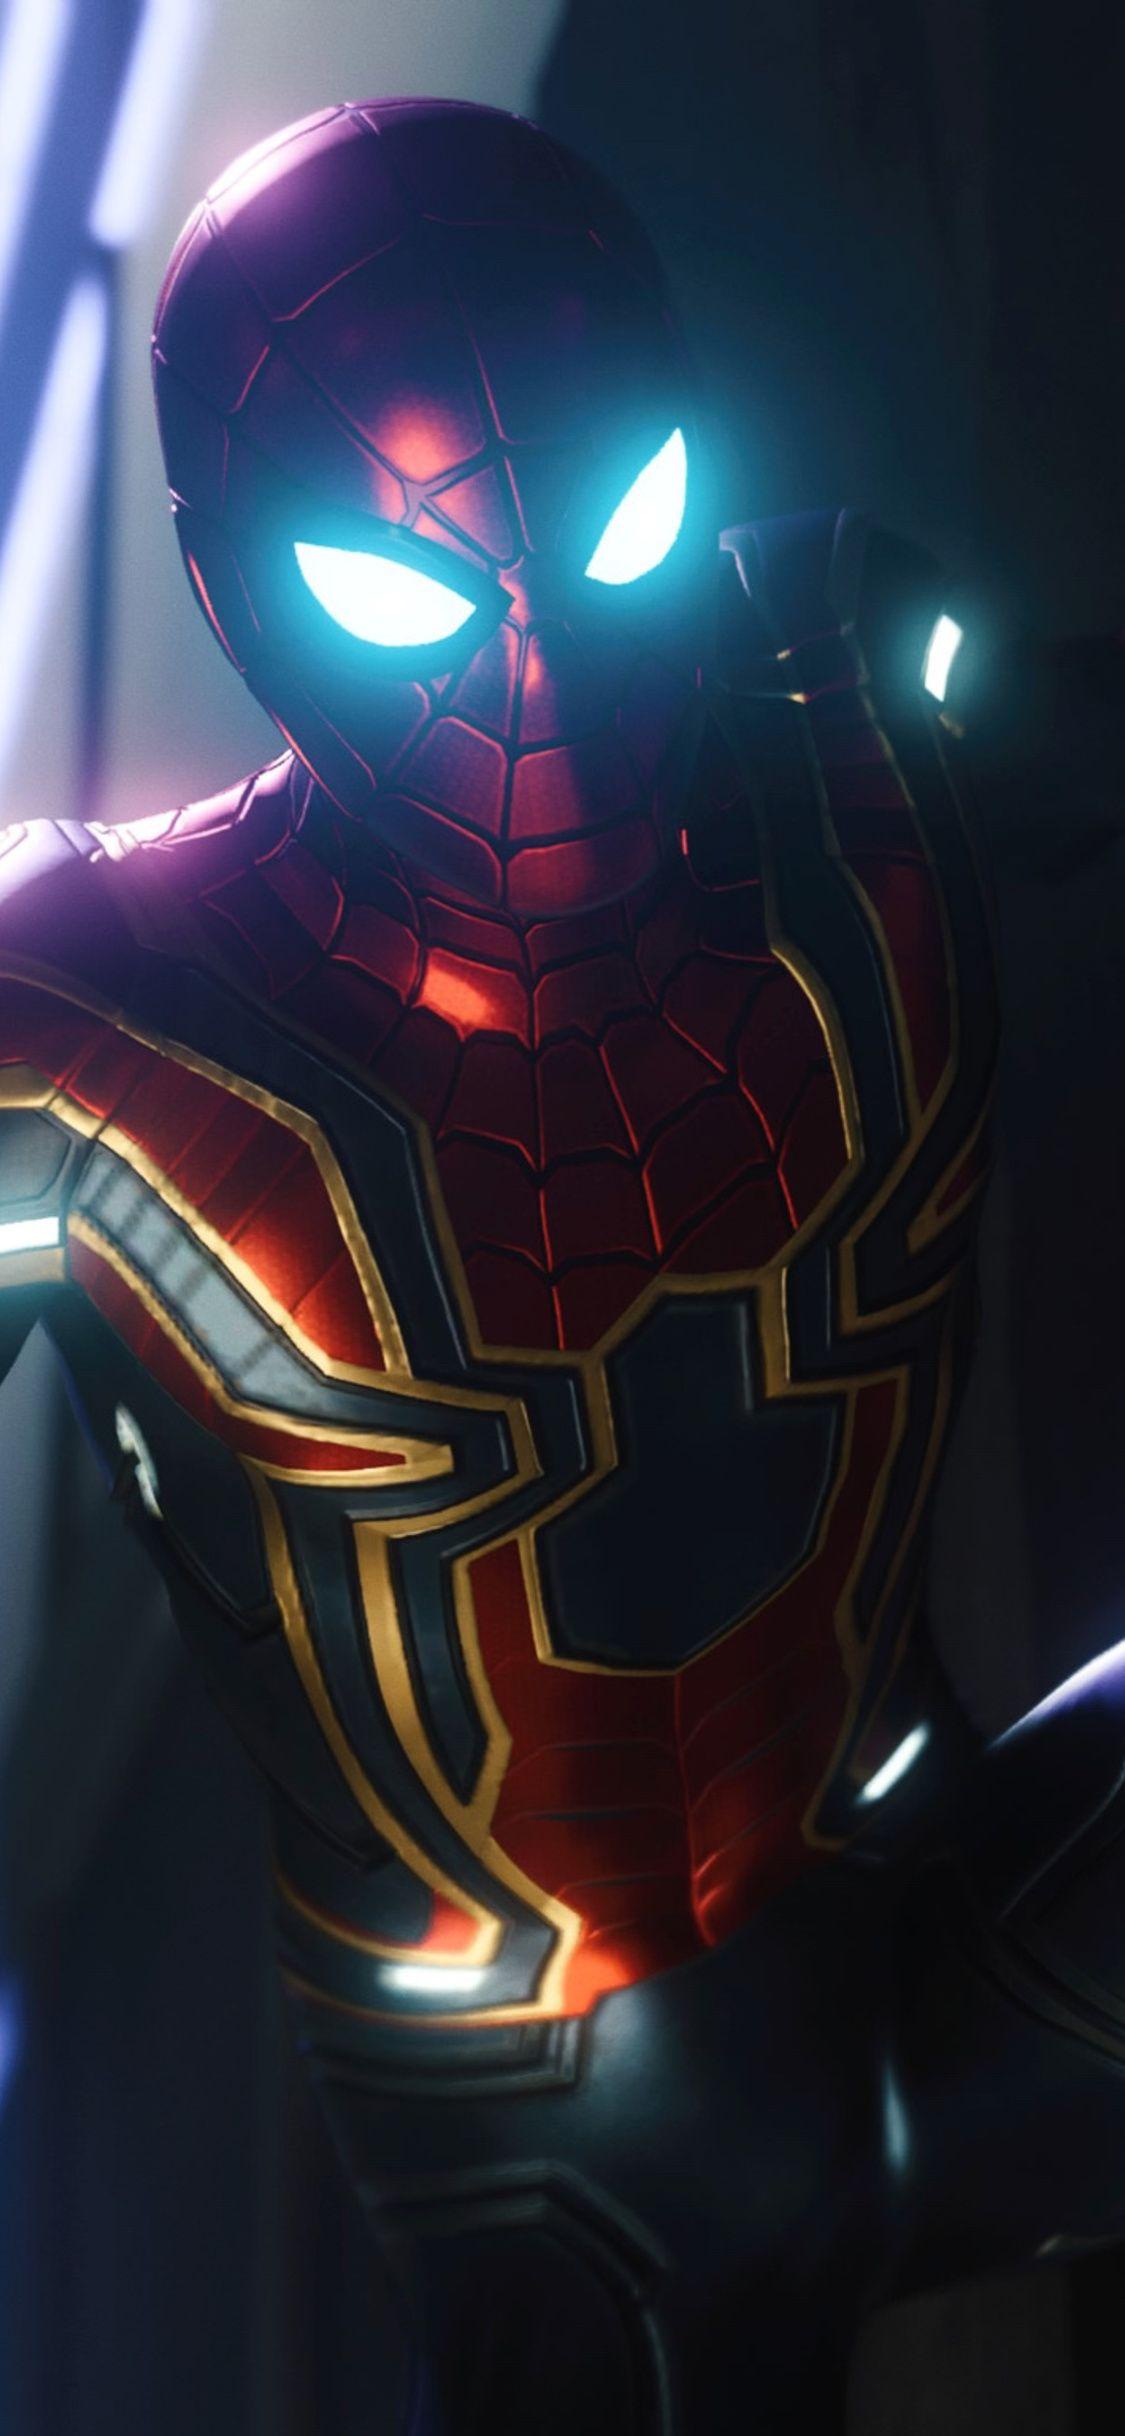 Spiderman PS4 Iron Spider Suit iPhone XS, iPhone 10